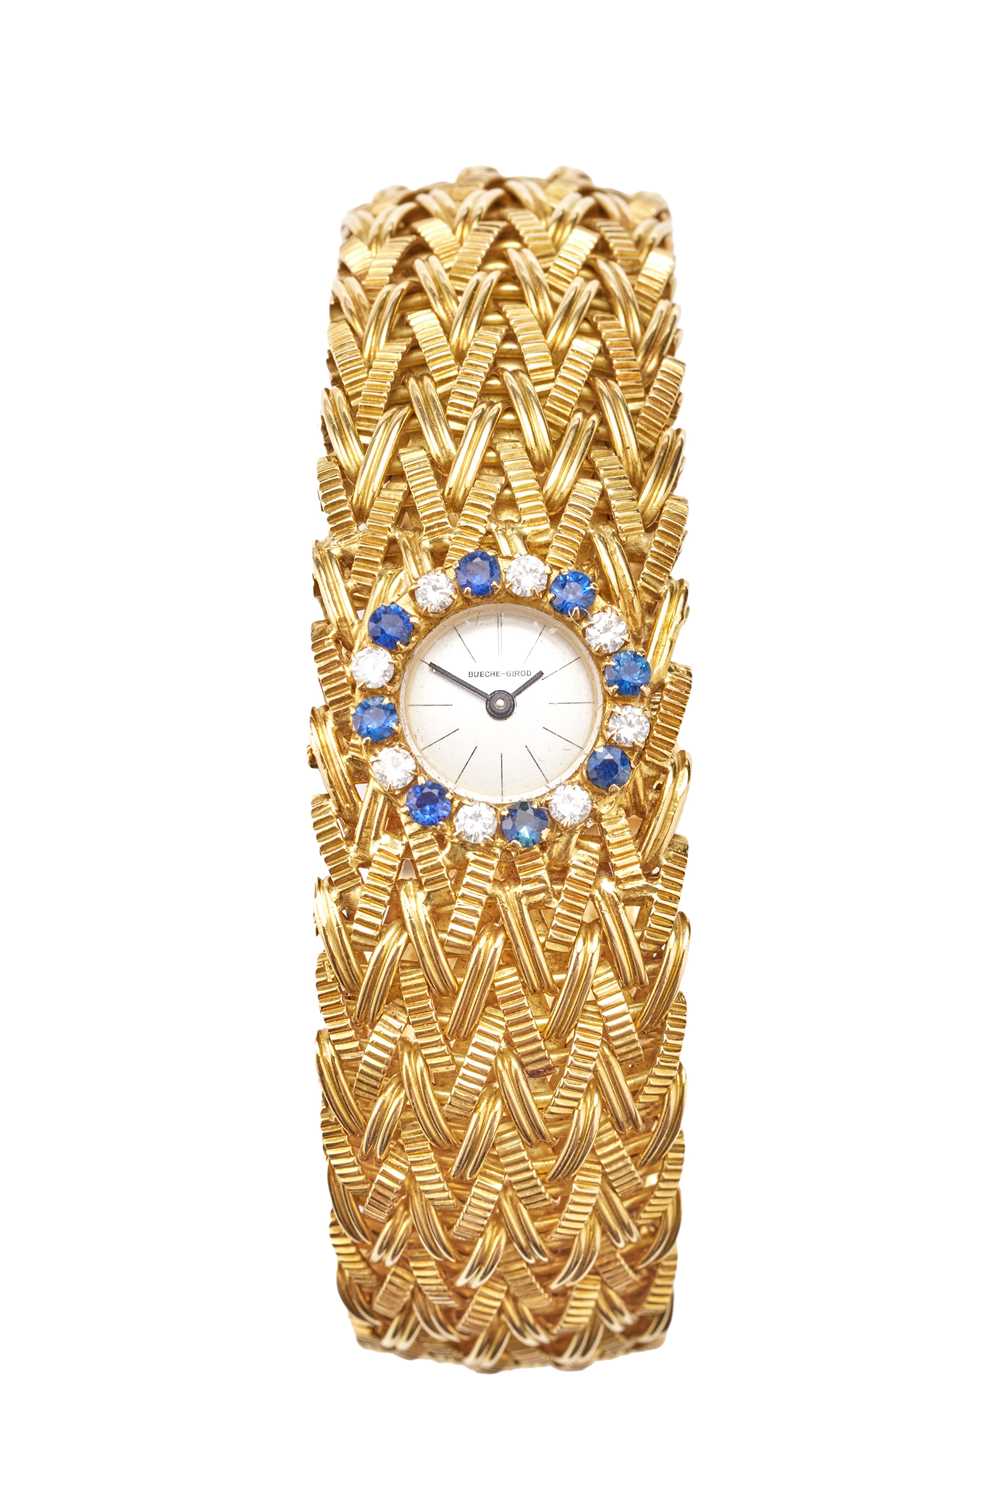 Bueche Girod: A Lady's 18 Carat Gold Diamond and Sapphire Set Wristwatch, signed Bueche Girod, 1964,